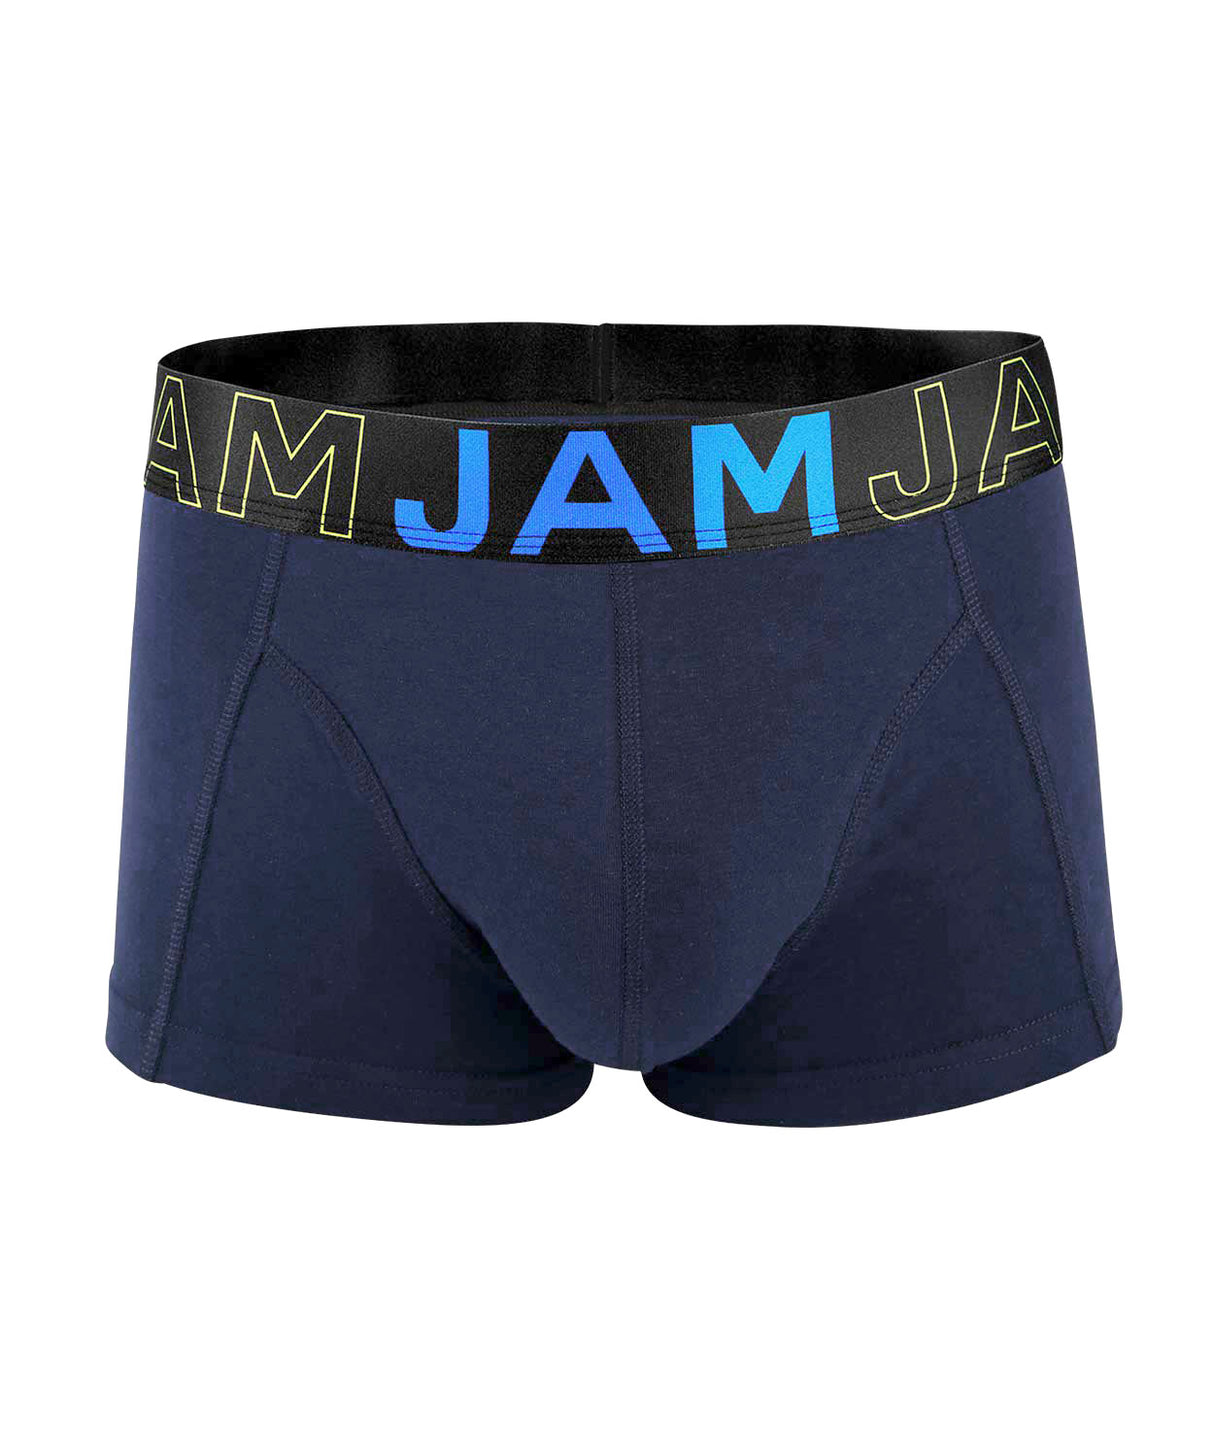 JAM BASICS - Boxer Trunk